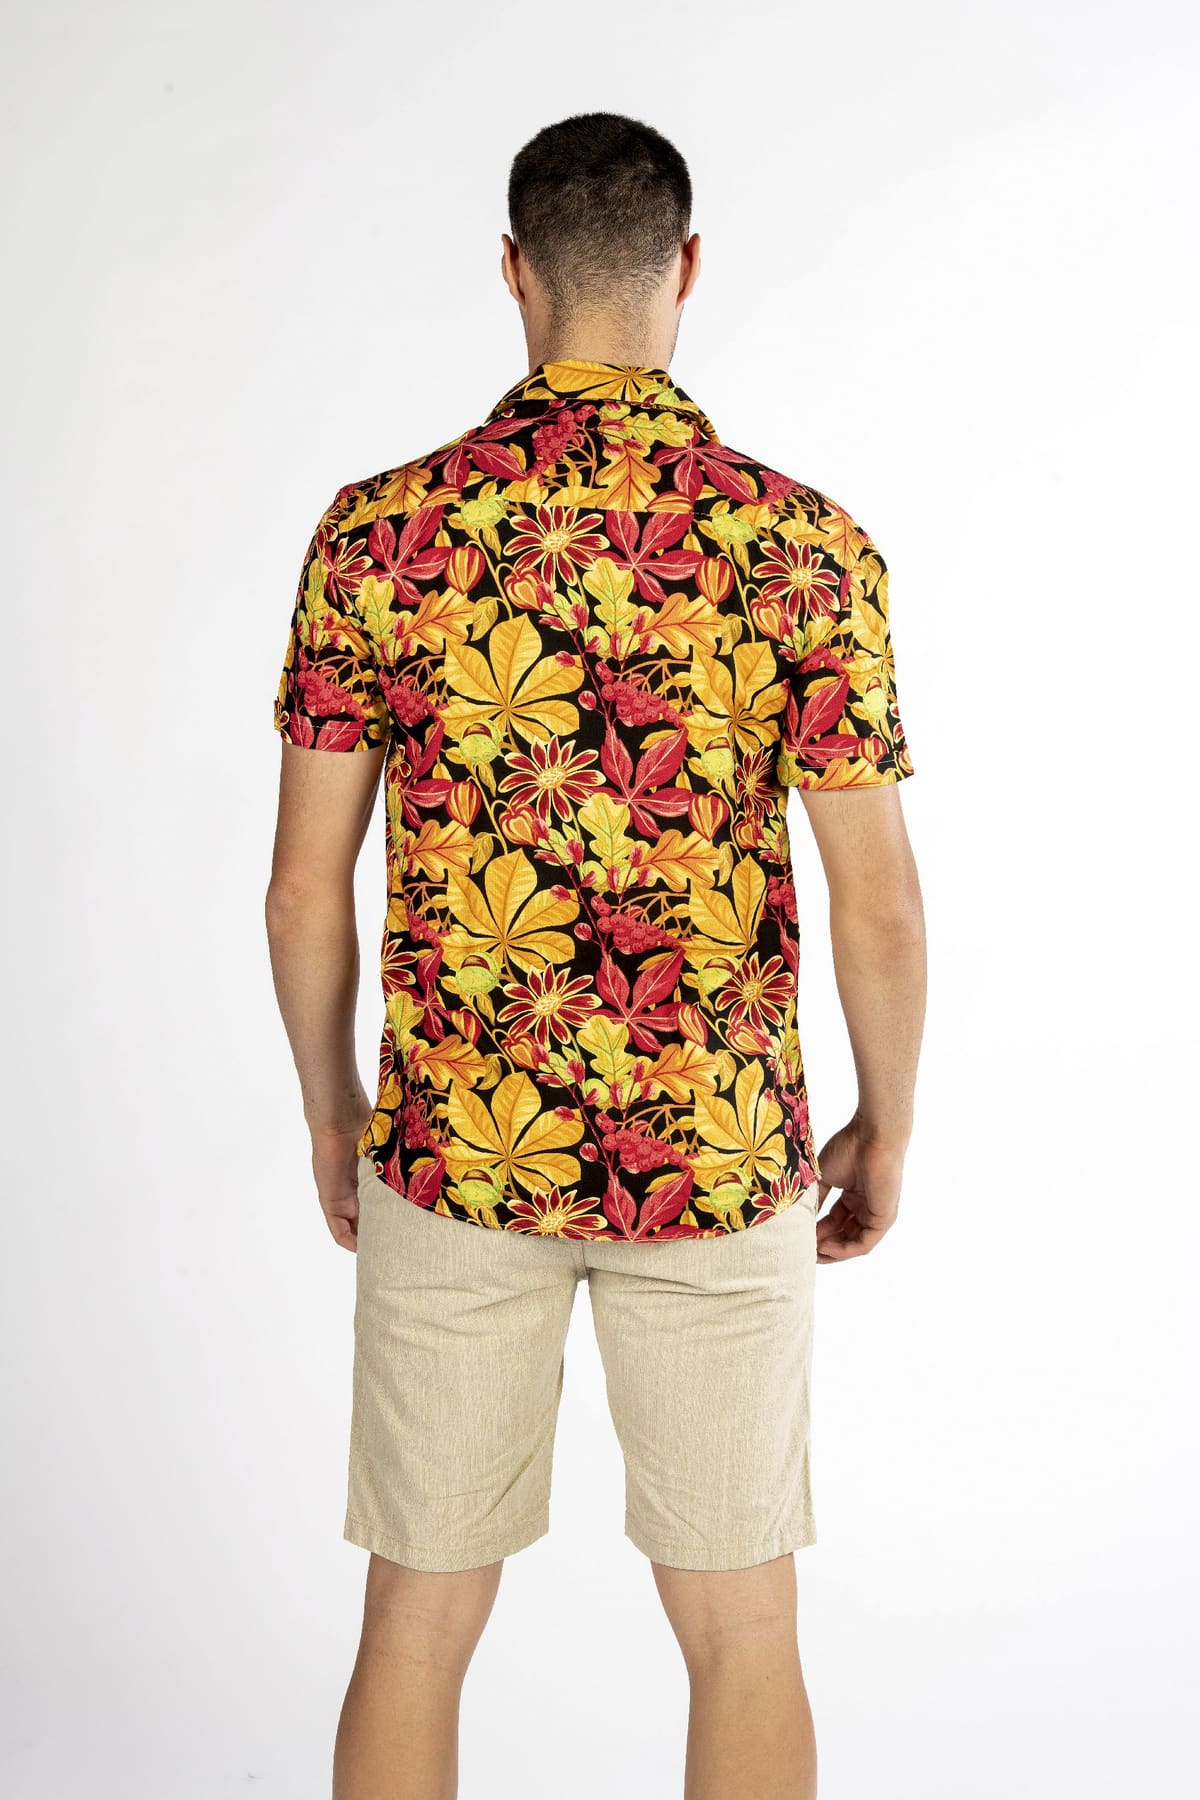 Camicia uomo hawaiana floreale